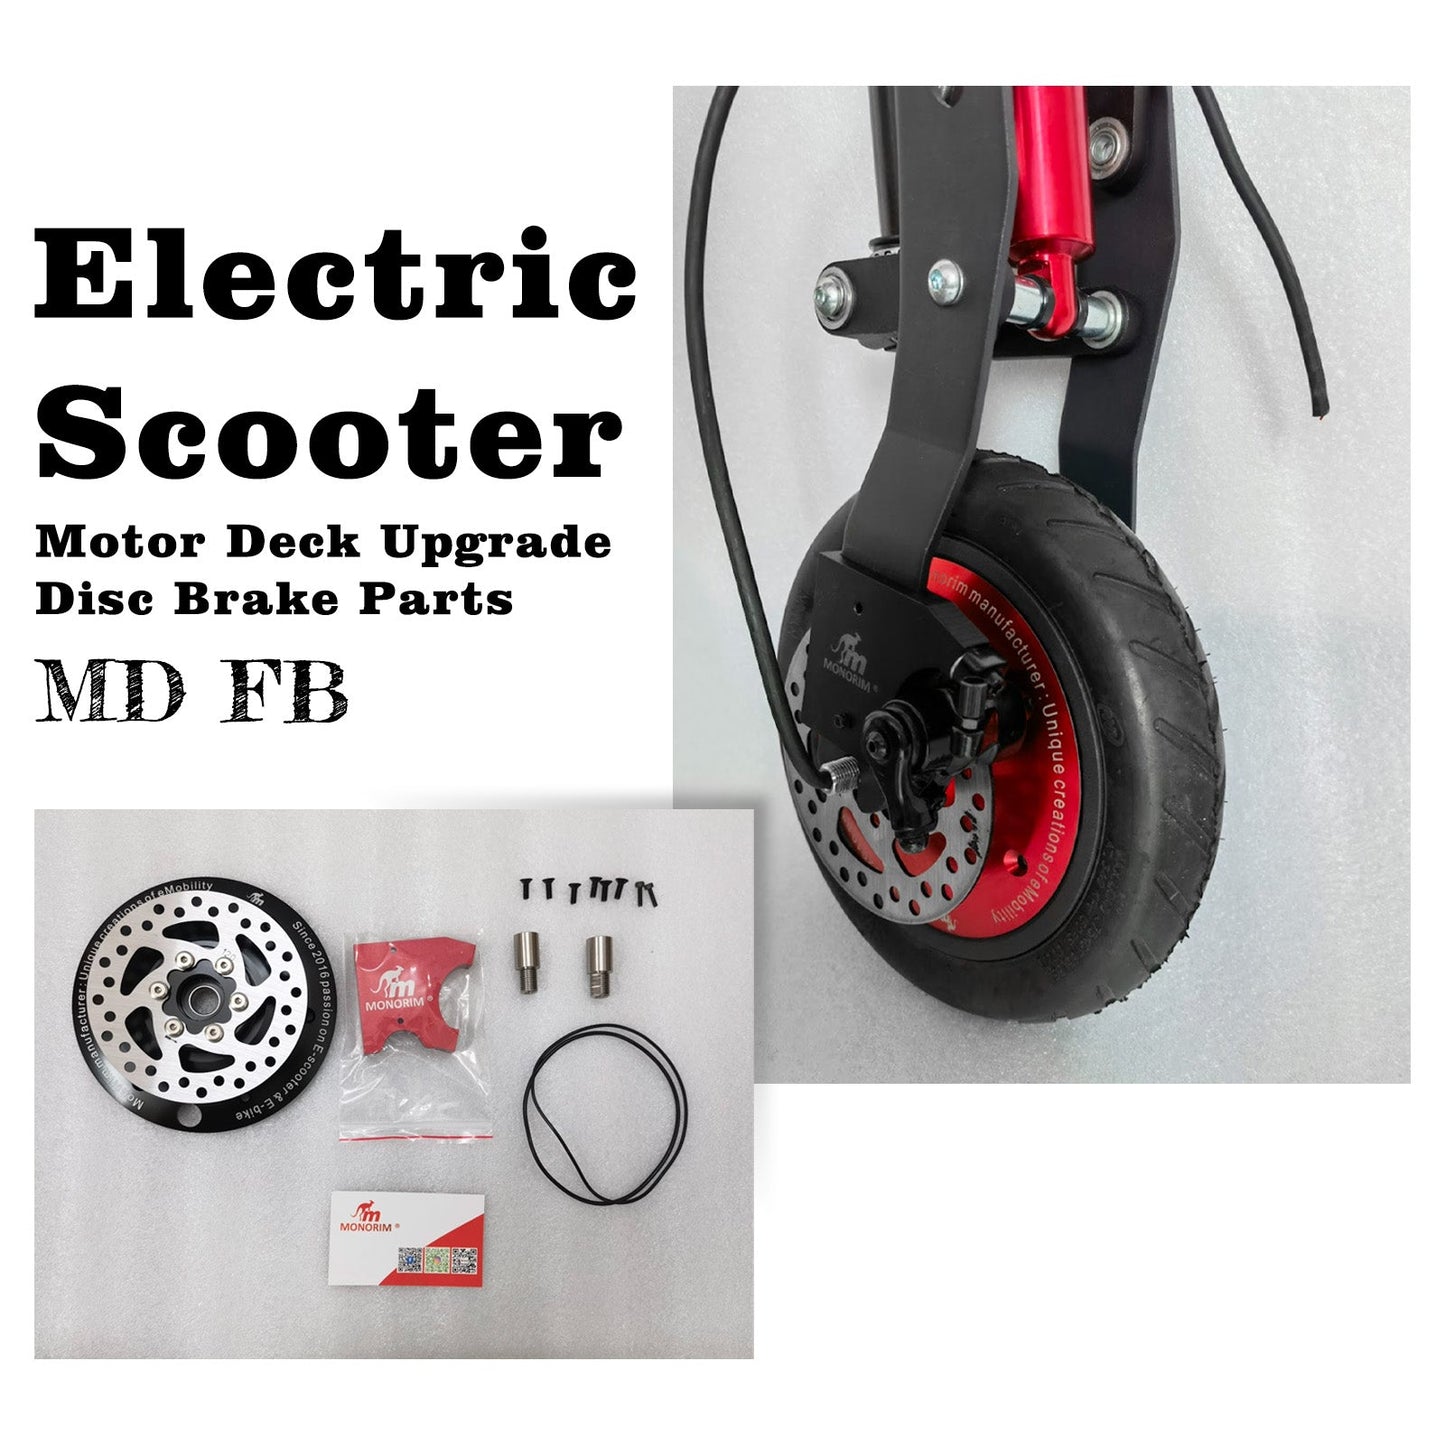 Monorim MD FB Motor Deck Upgrade Disc Brake Parts for Hiboy s2 Scooter, 120/140mm Disc for Front Motor